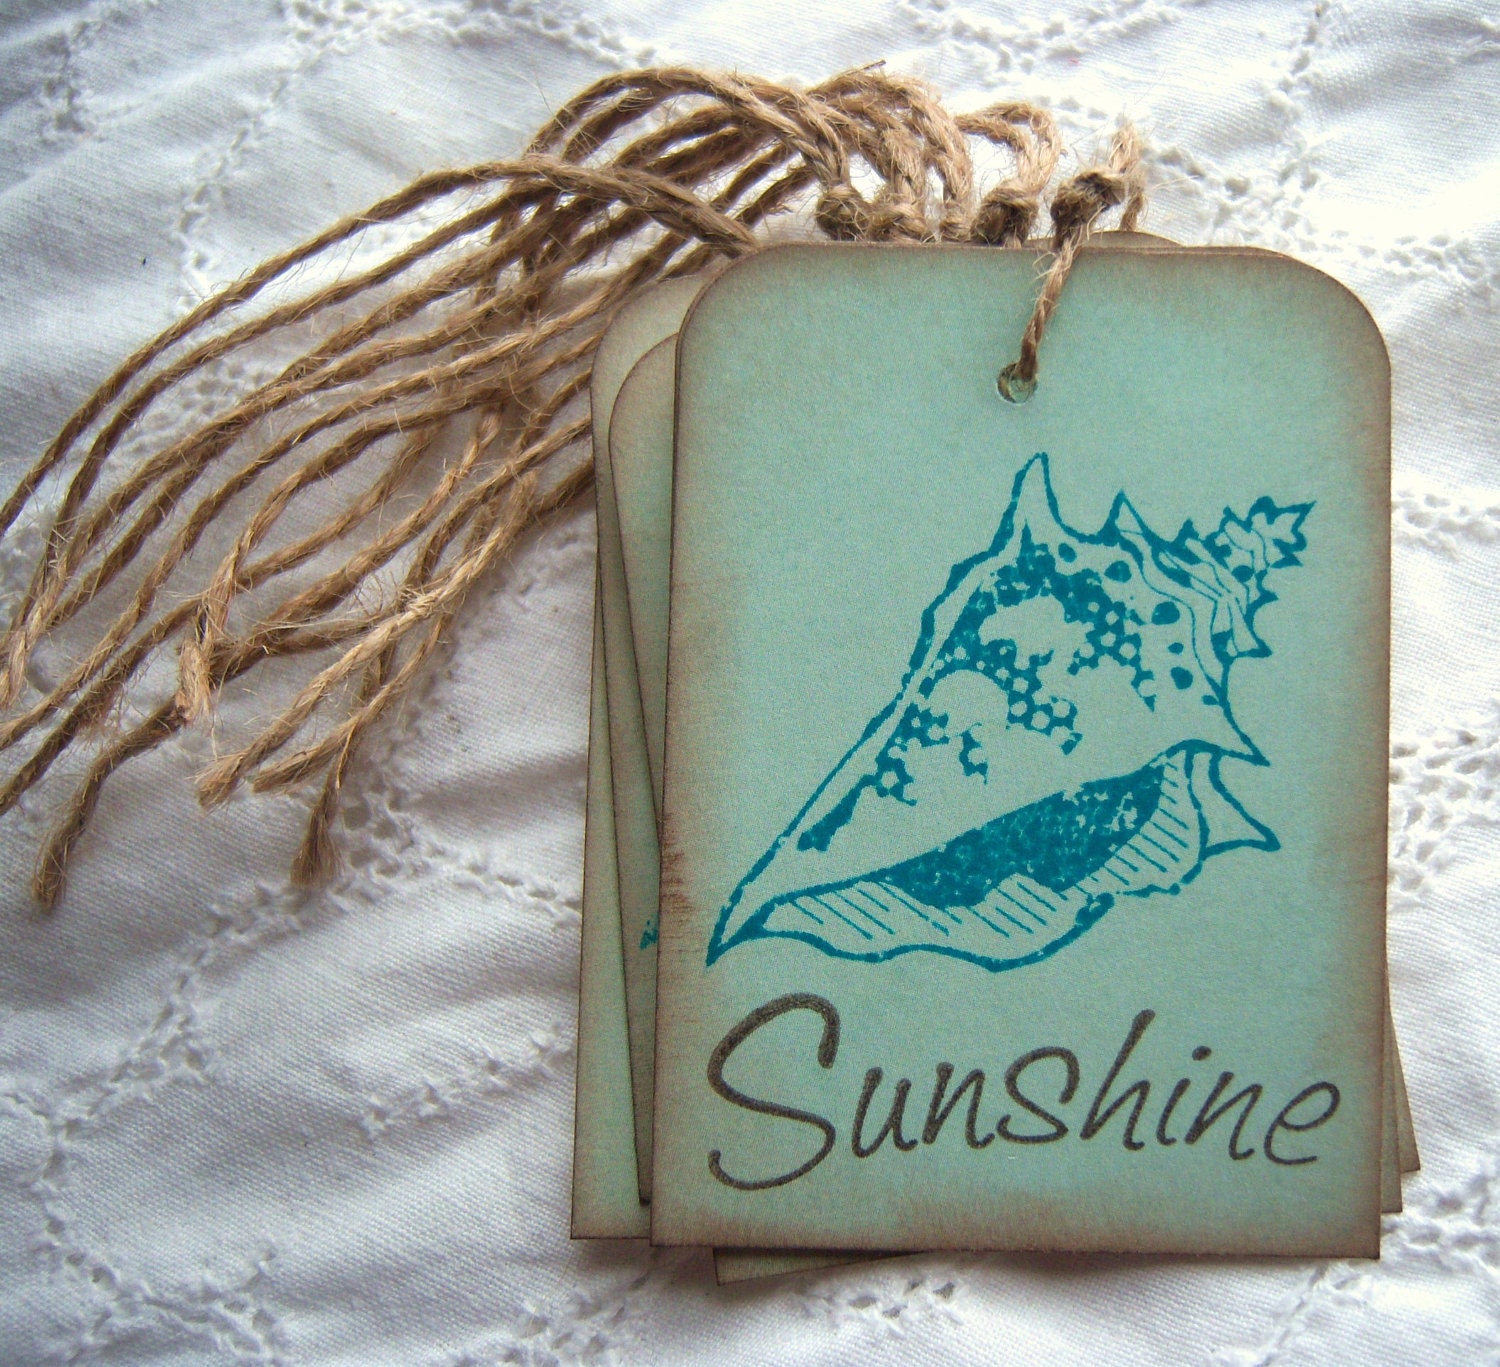 Sunshine and Seashells Hang Tags - Jute Twine and Vintage Inspired